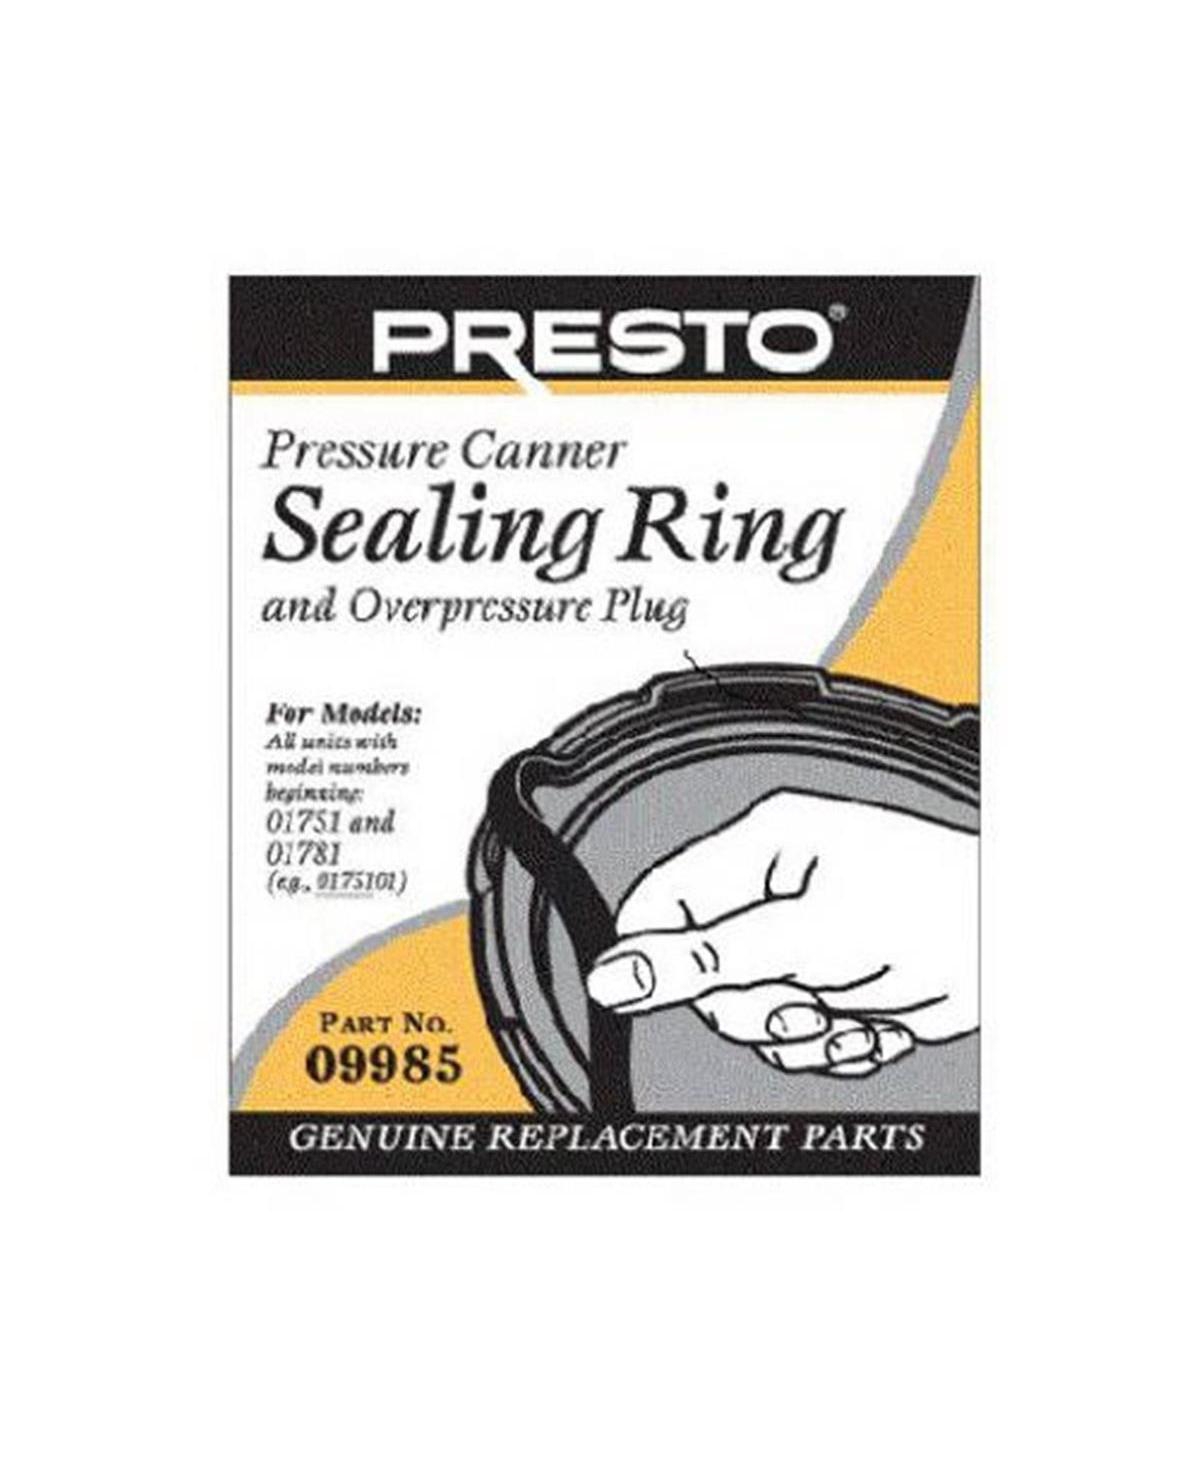 Presto 09985 Pressure Canner Sealing Ring And Overpressure Plug In Black